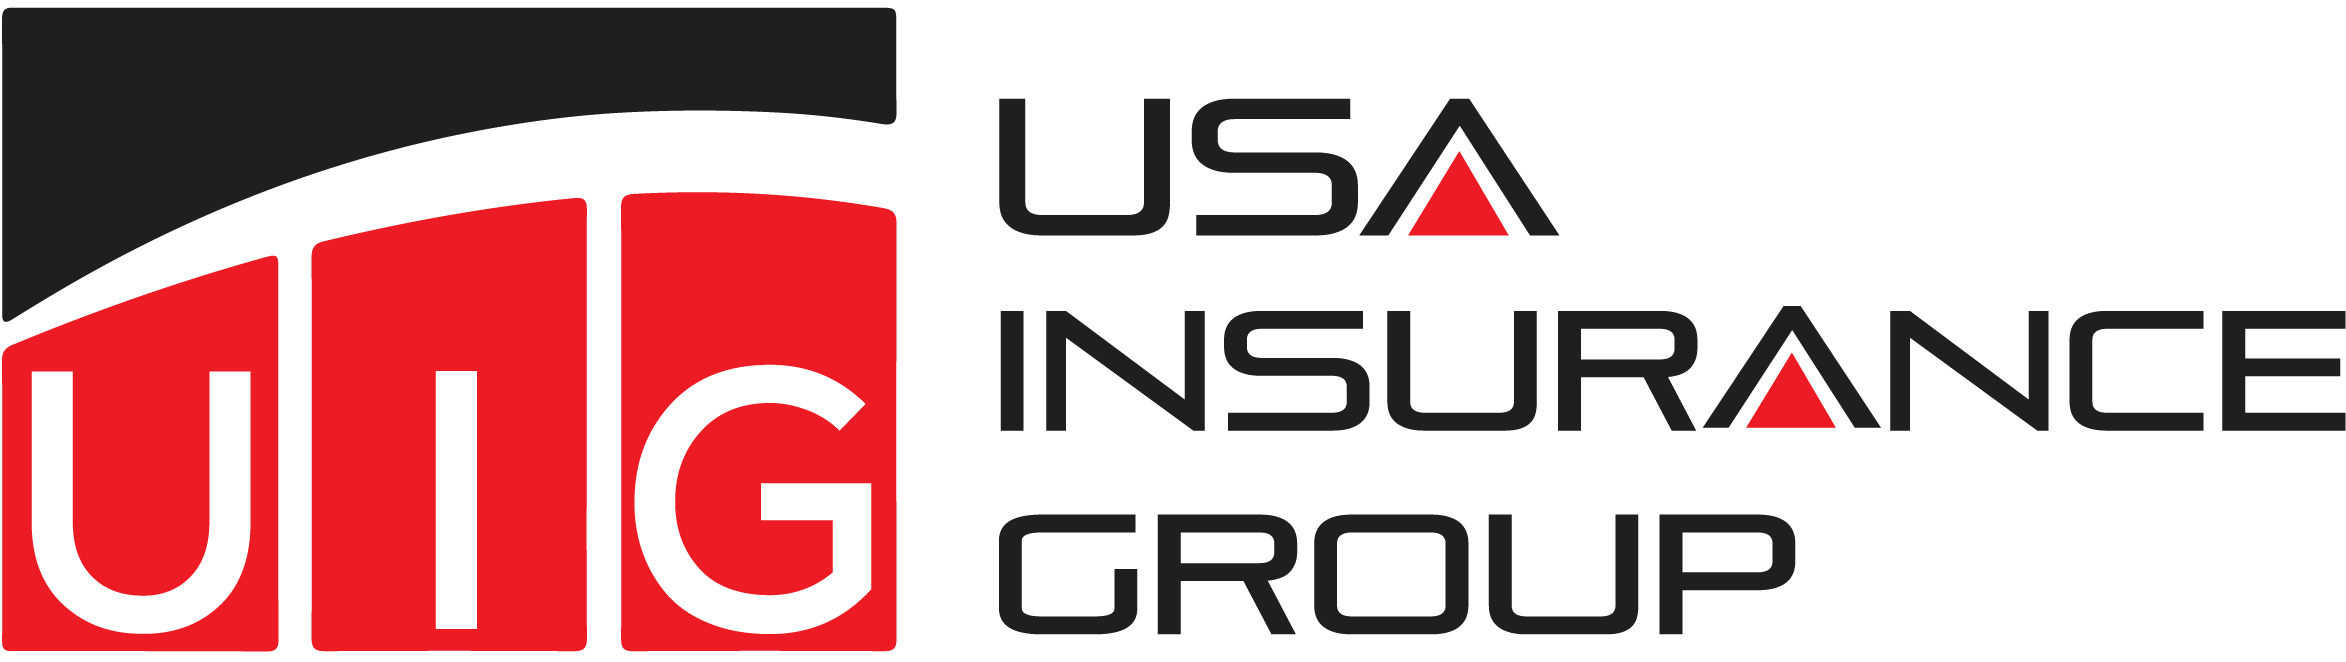 USA Insurance Group